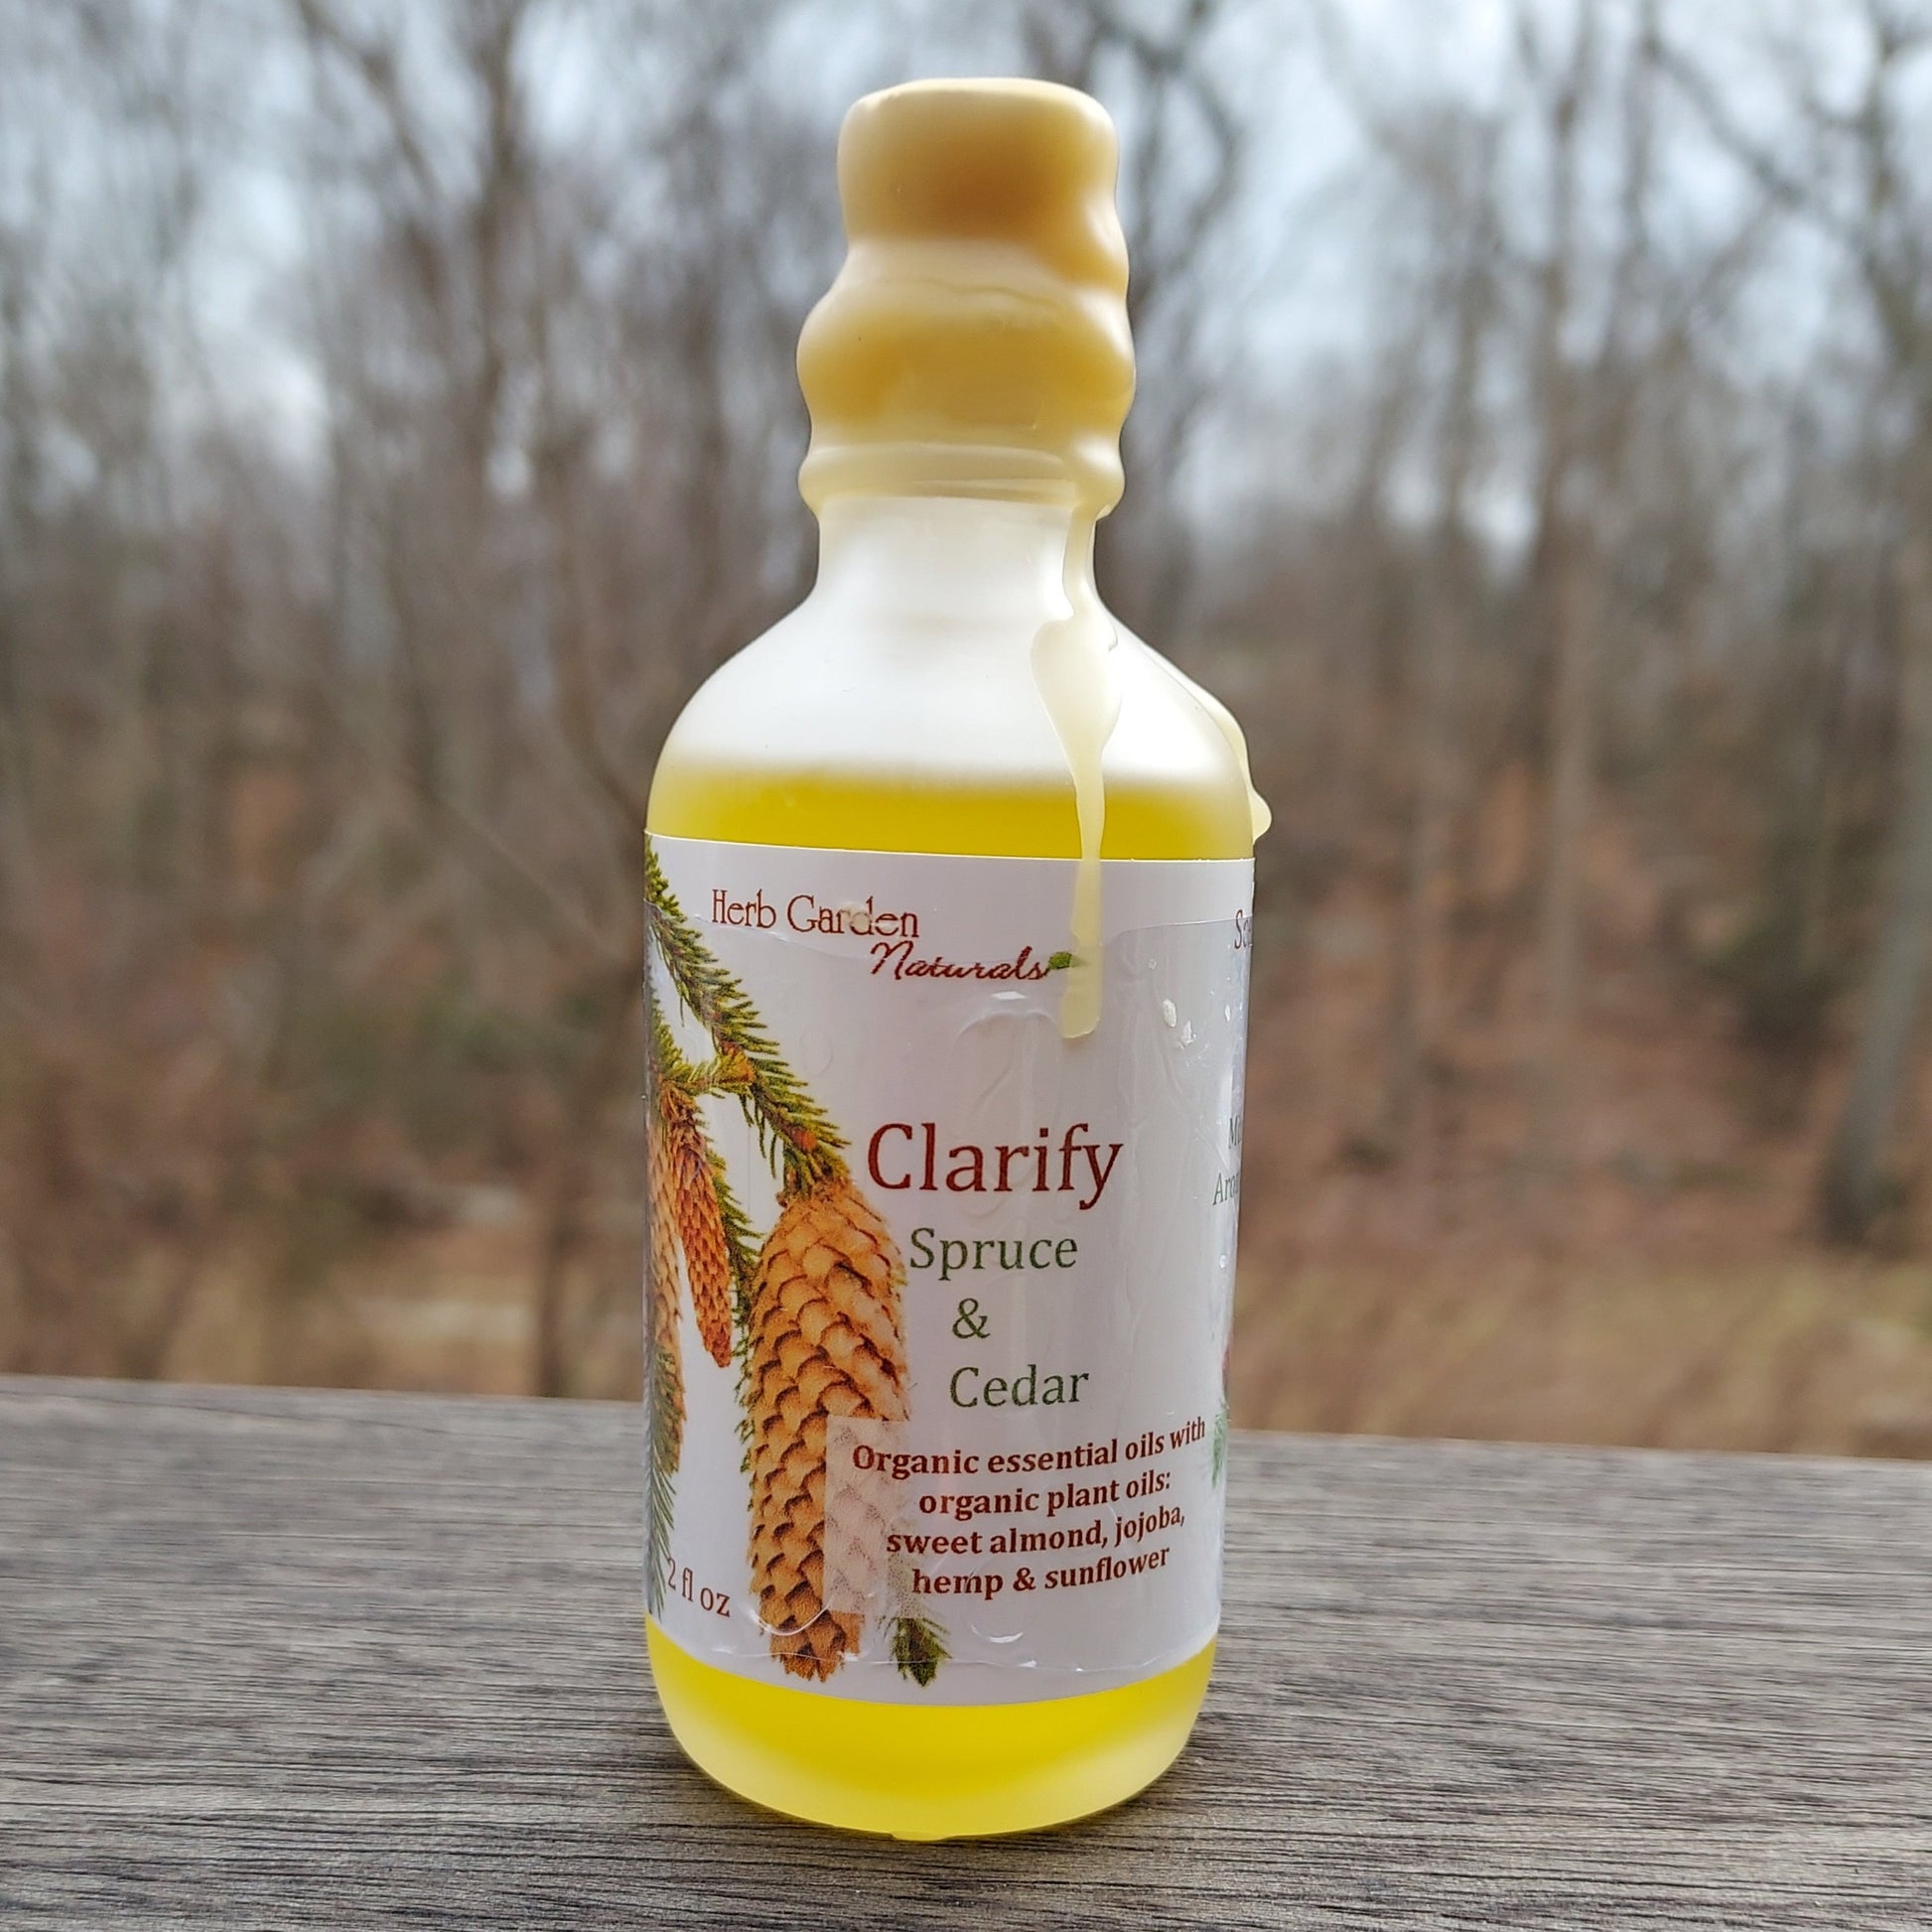 Clarify healing oil